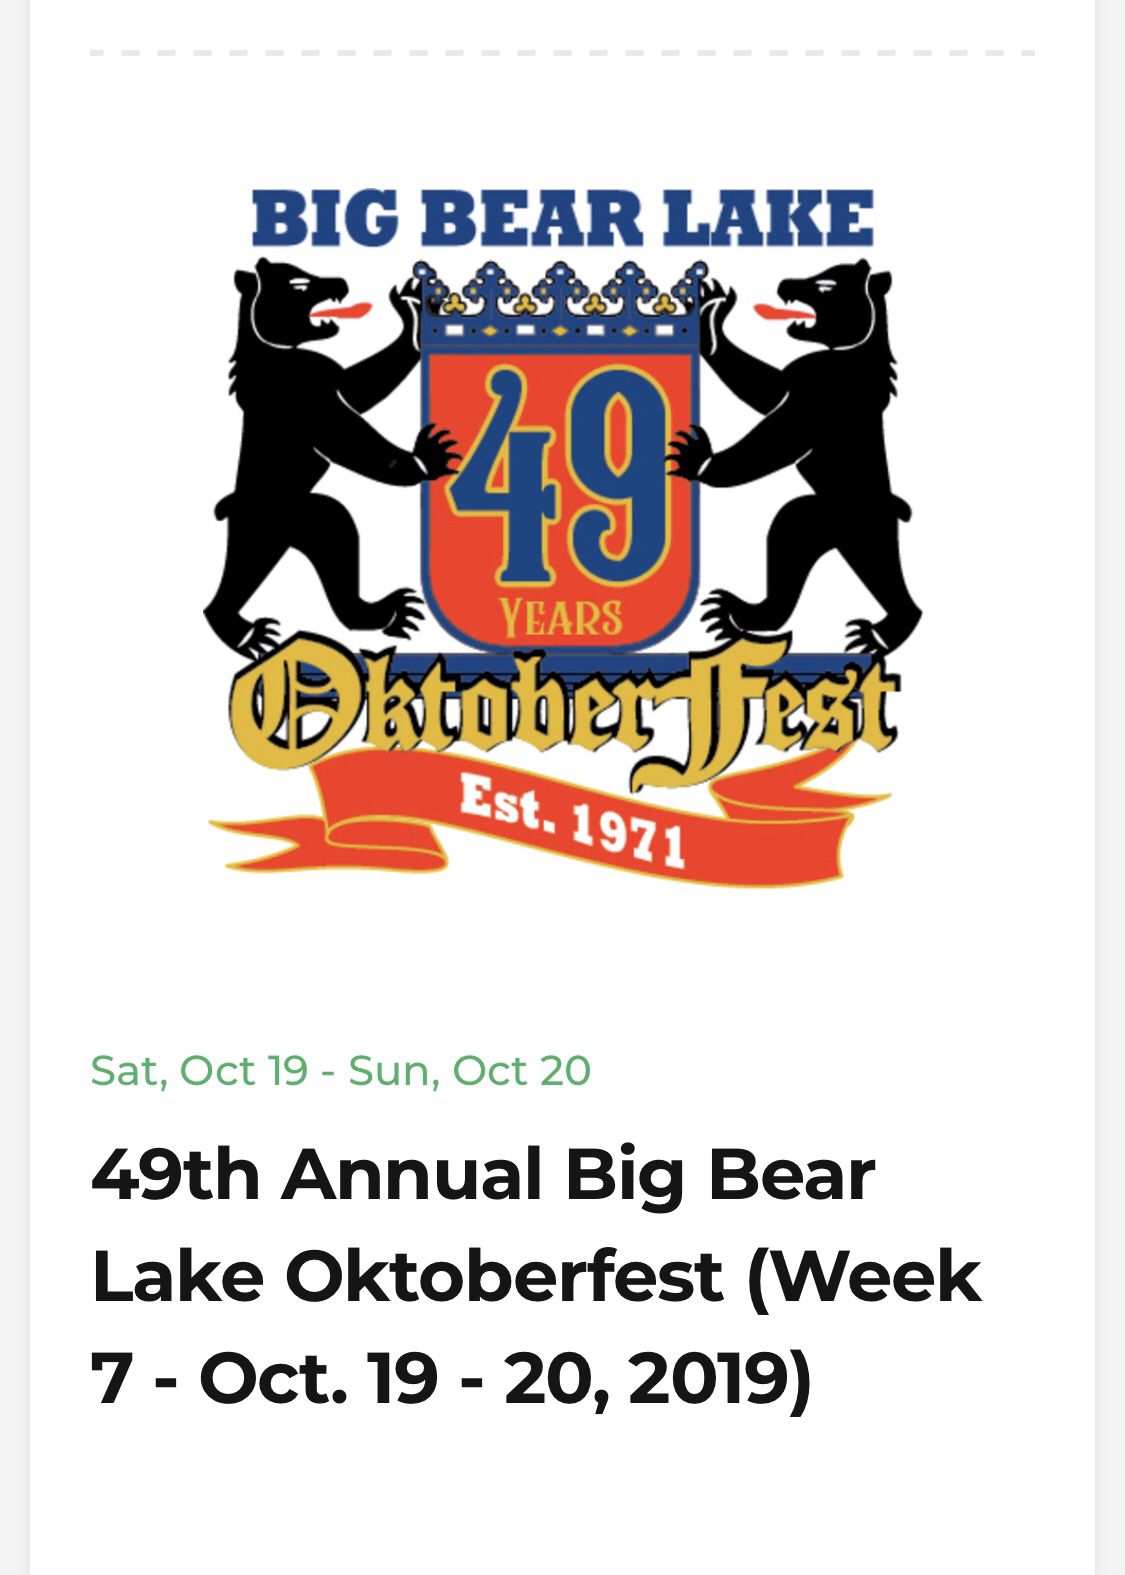 Big bear Oktoberfest 10/20 tickets two for 10$